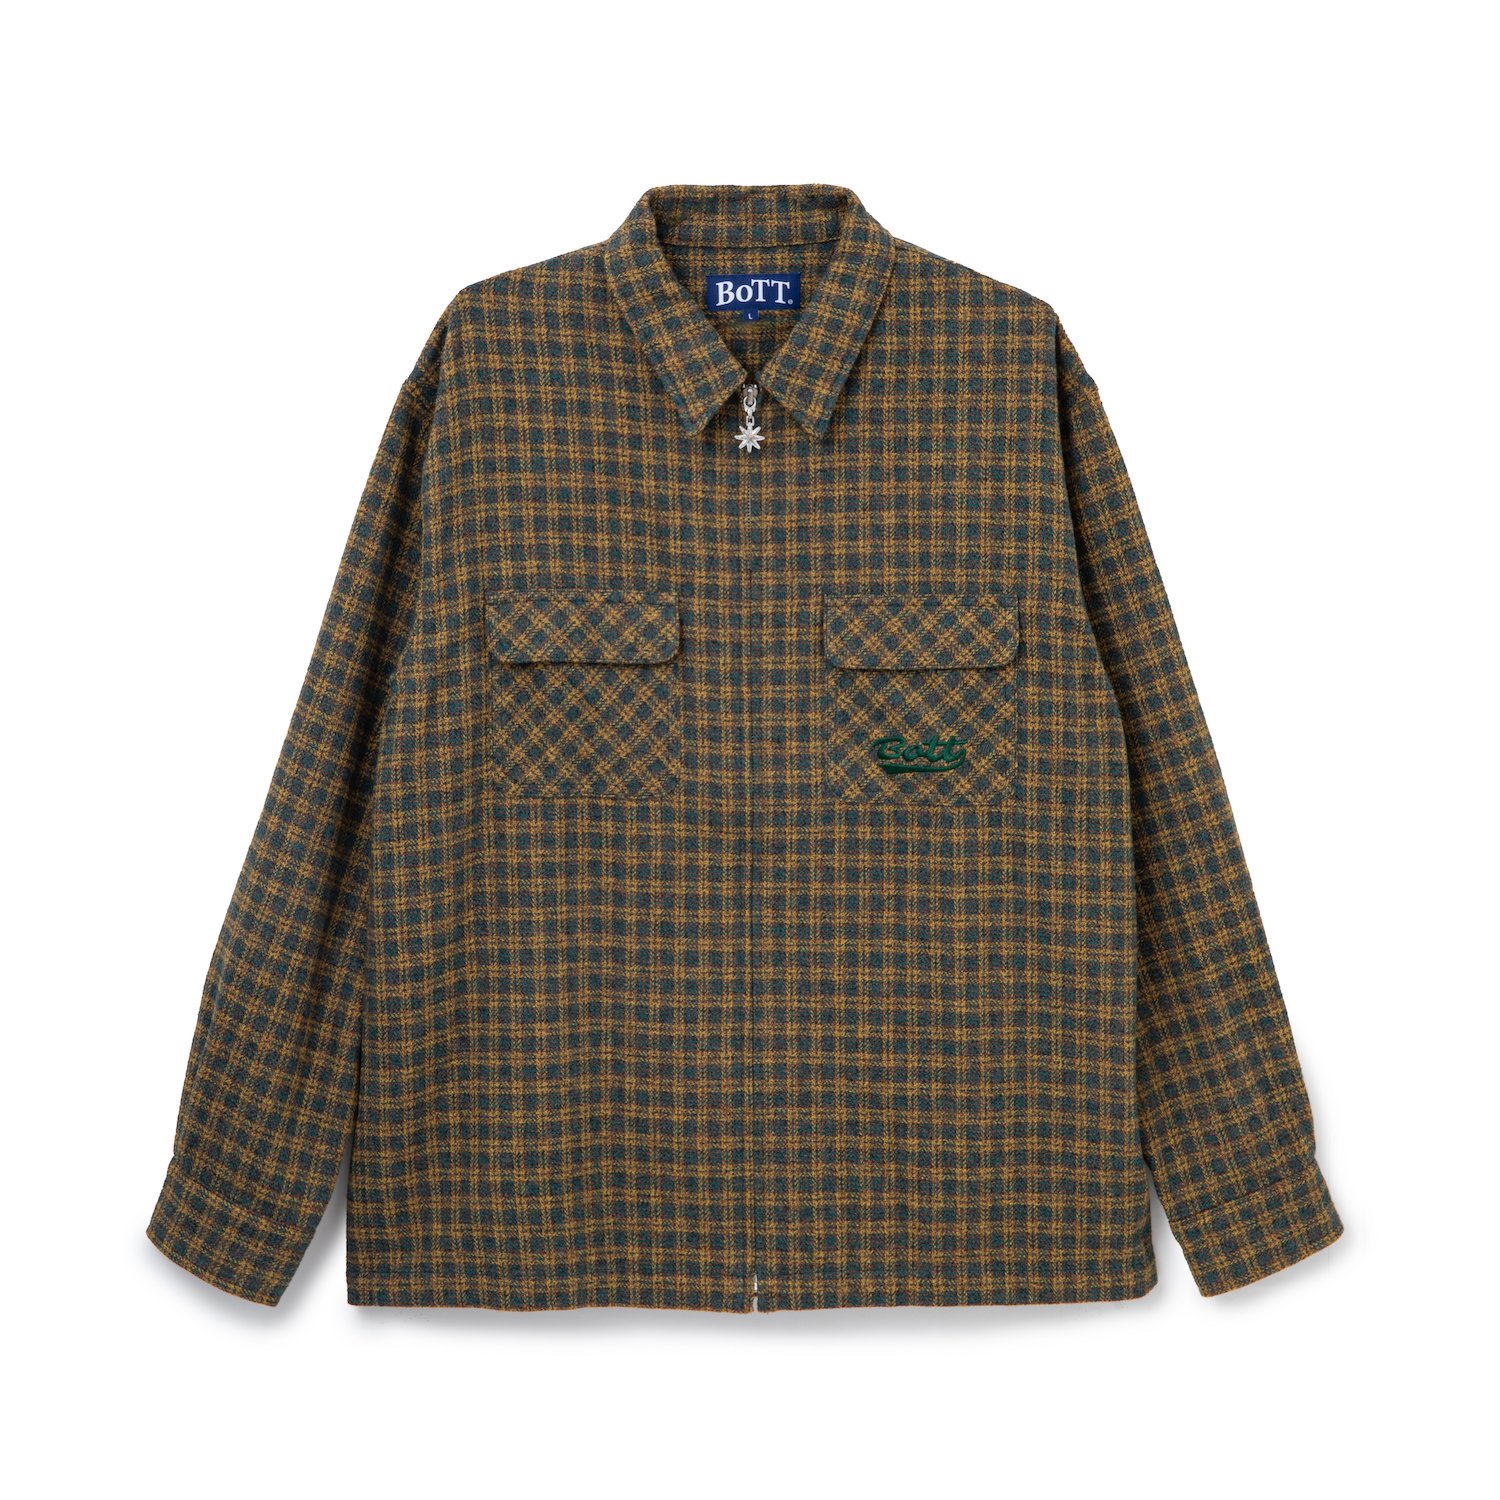 BoTT<br>Zip Up Flannel Shirt<br>